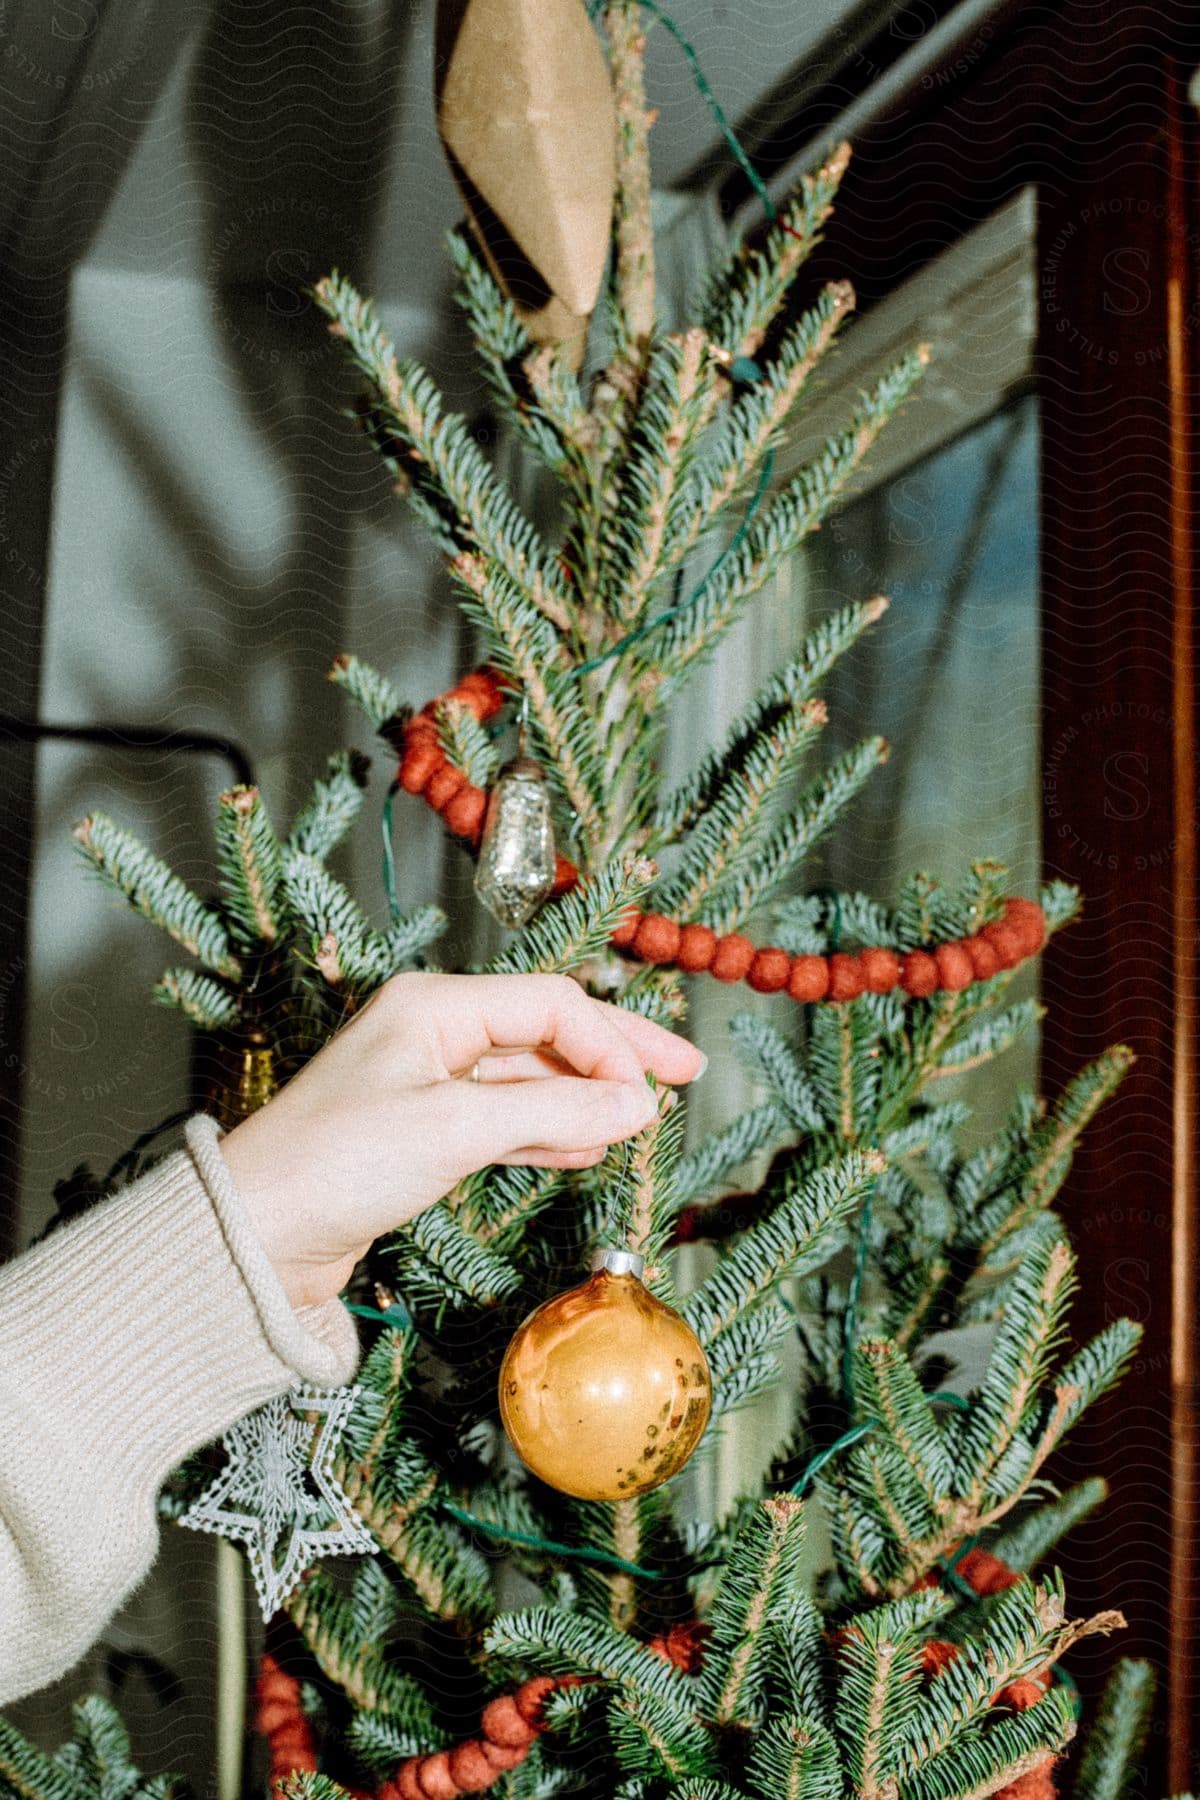 Woman hangs ornament on a Christmas tree.